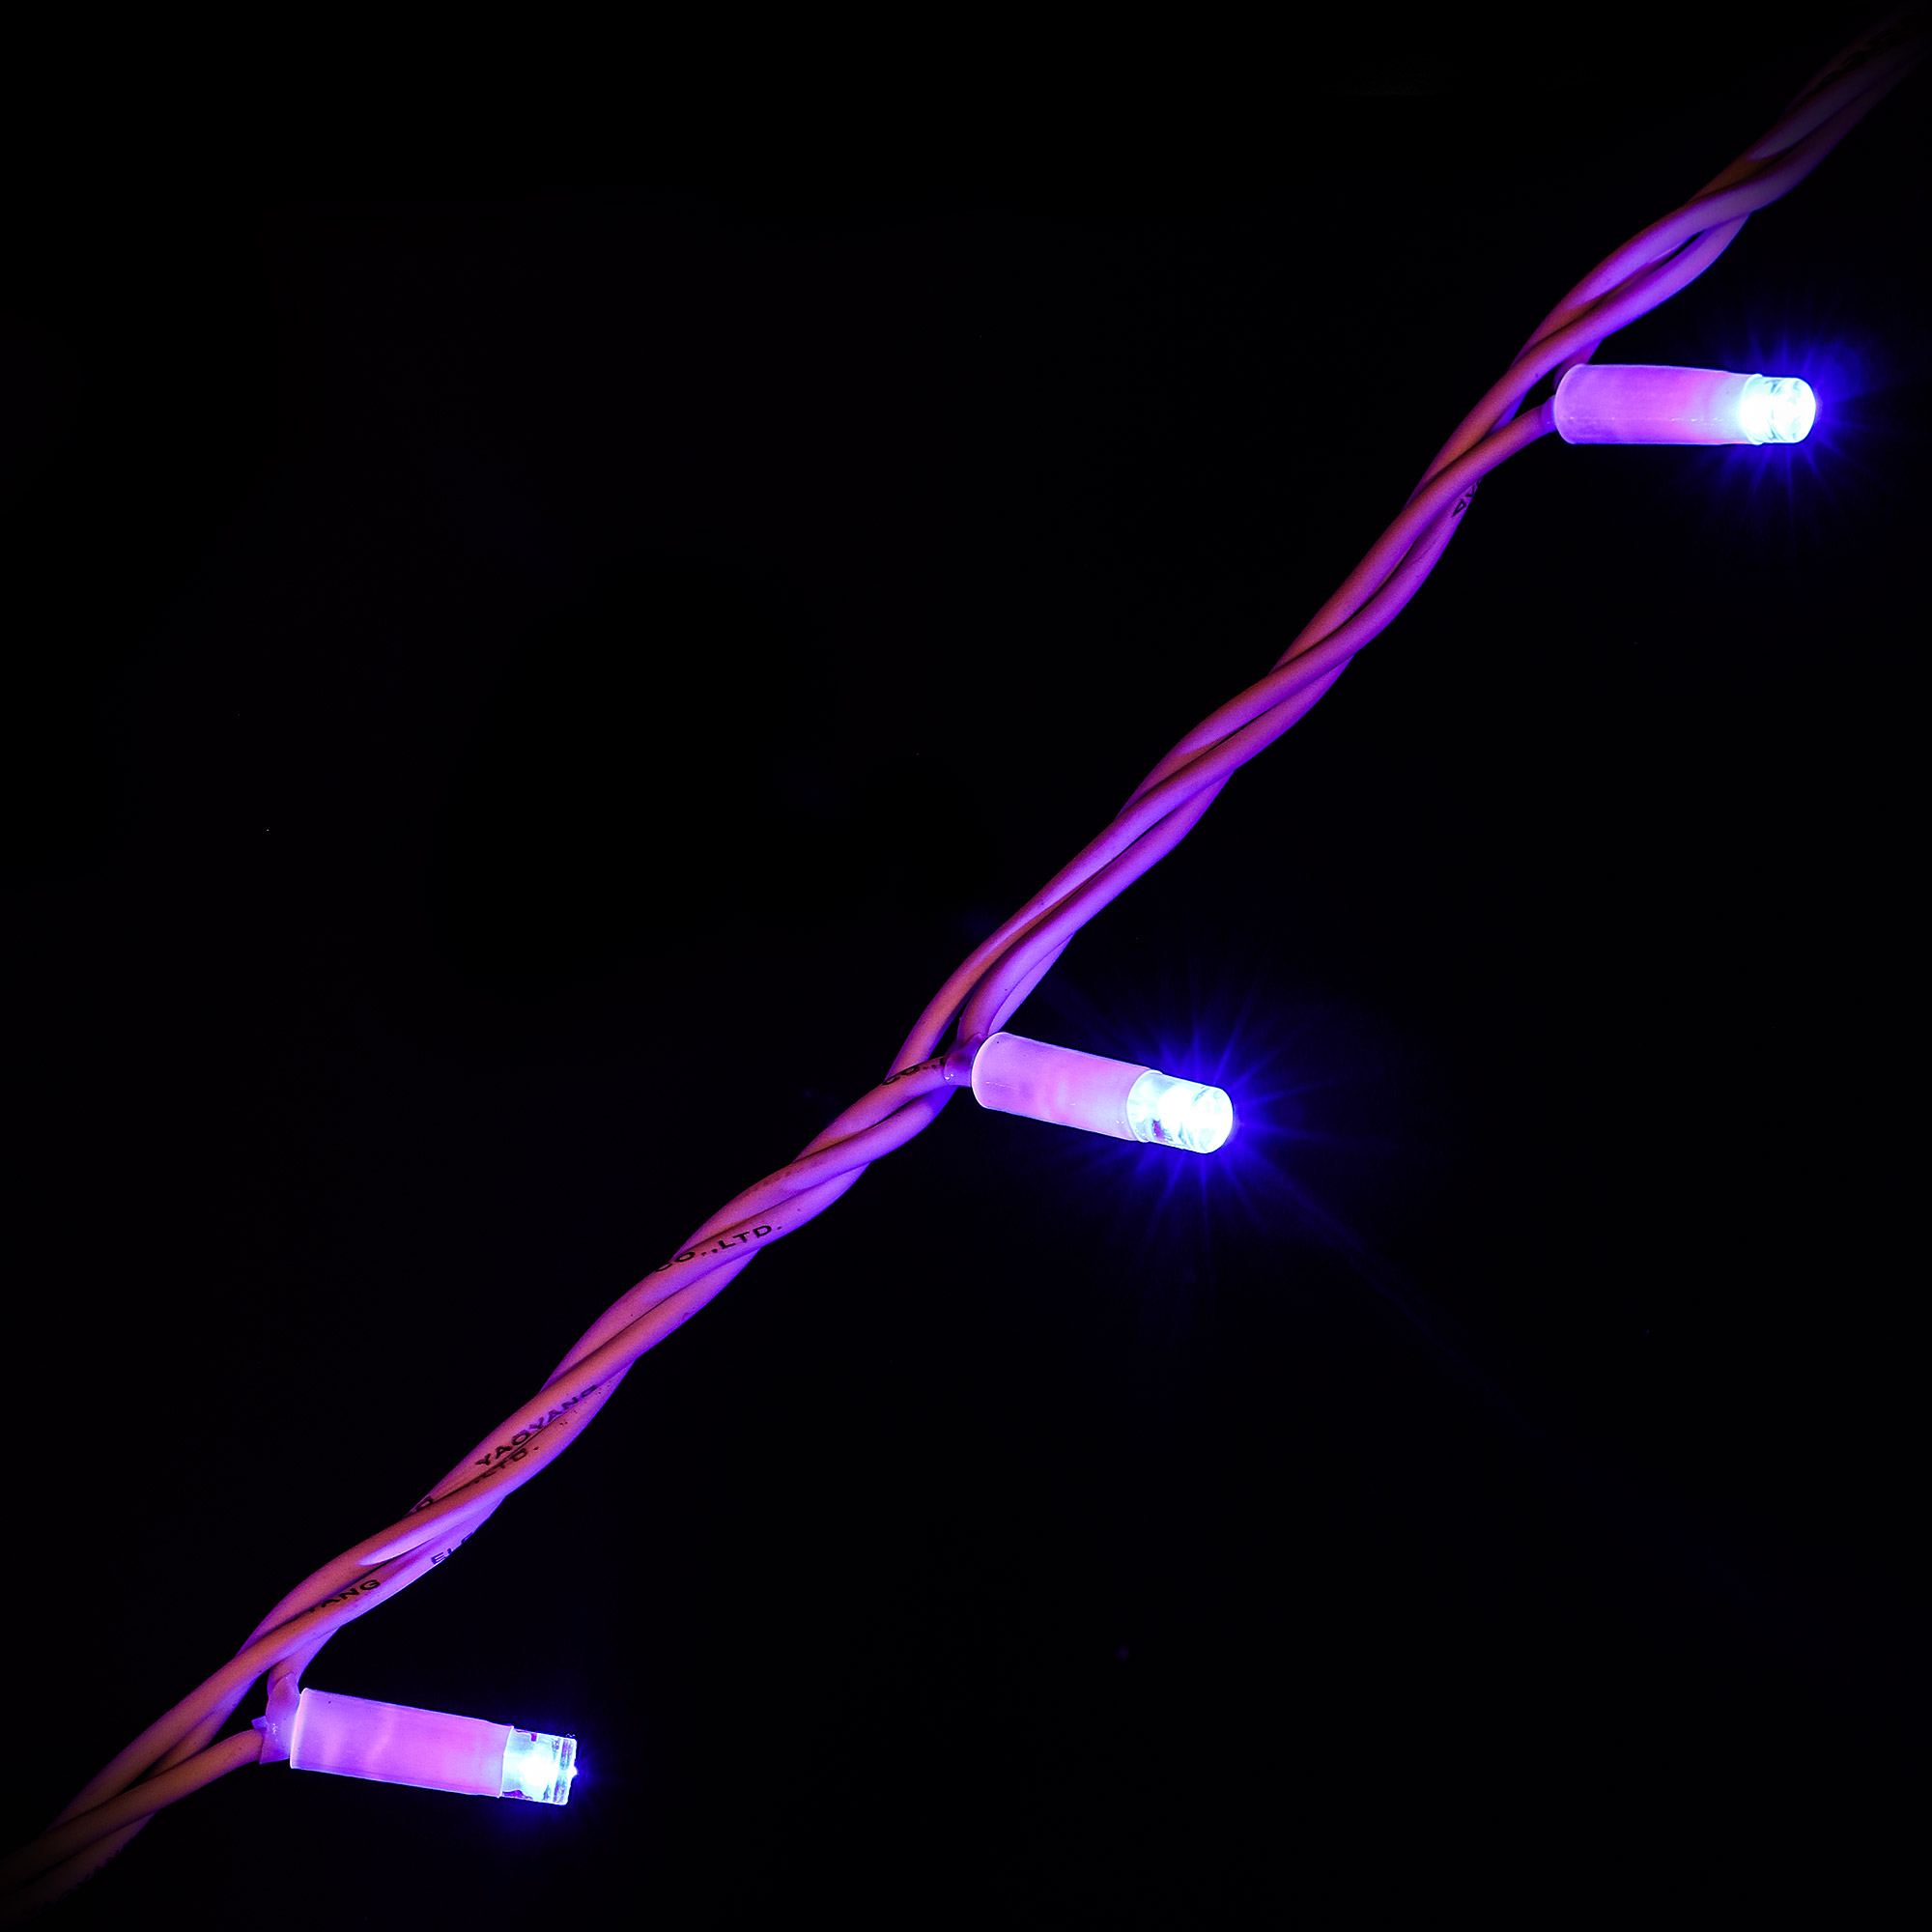 Электрогирлянда Reason 1020 см 100 LED, цвет сиреневый - фото 3